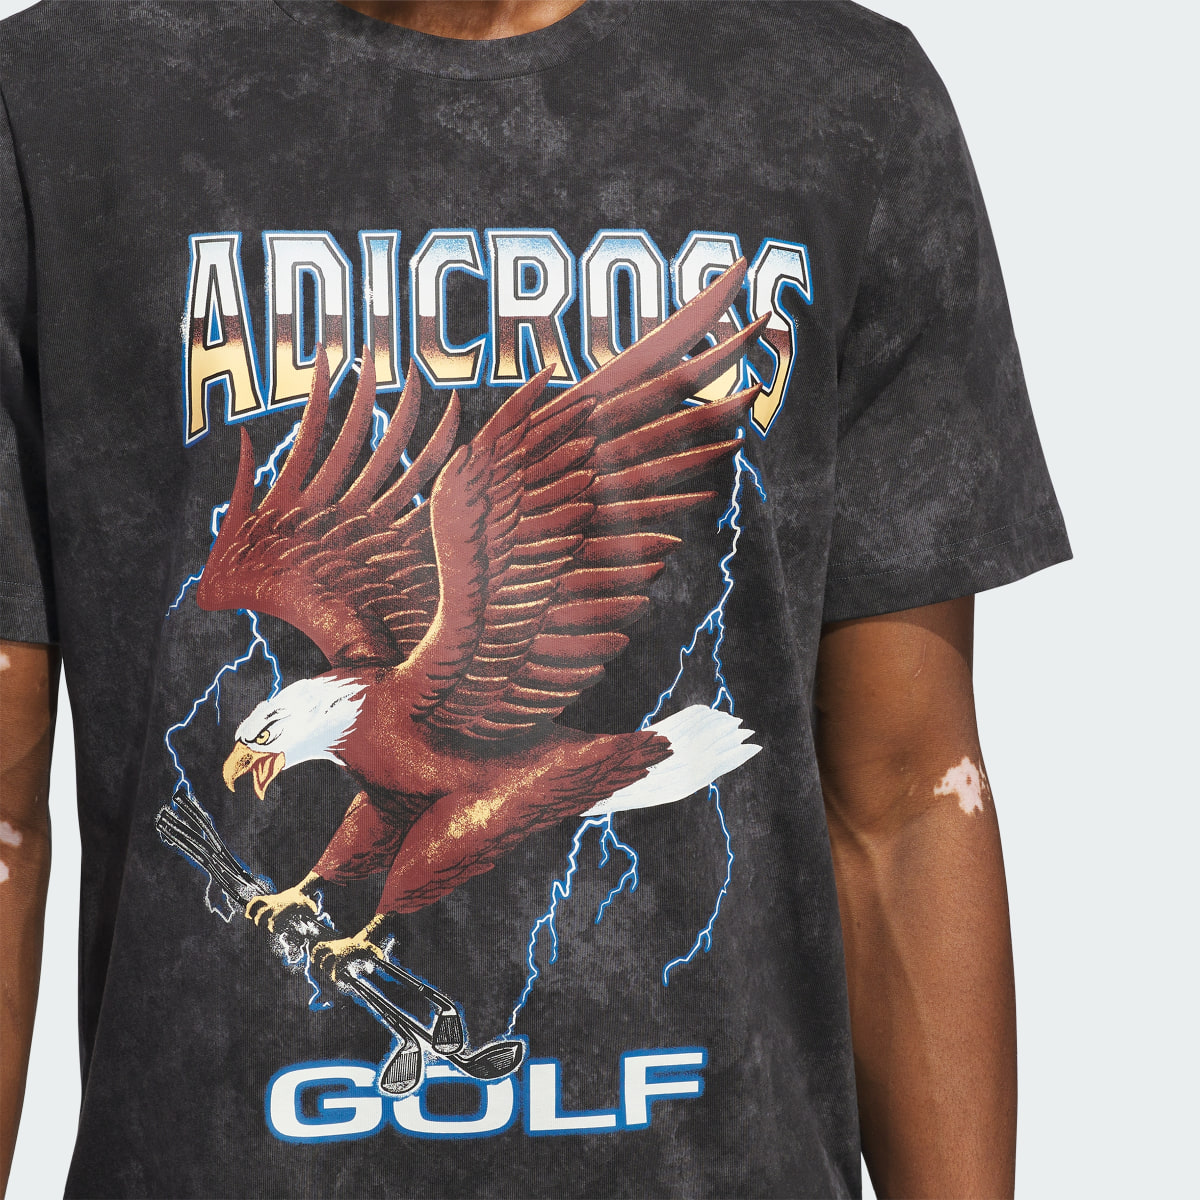 Adidas T-shirt Adicross. 6